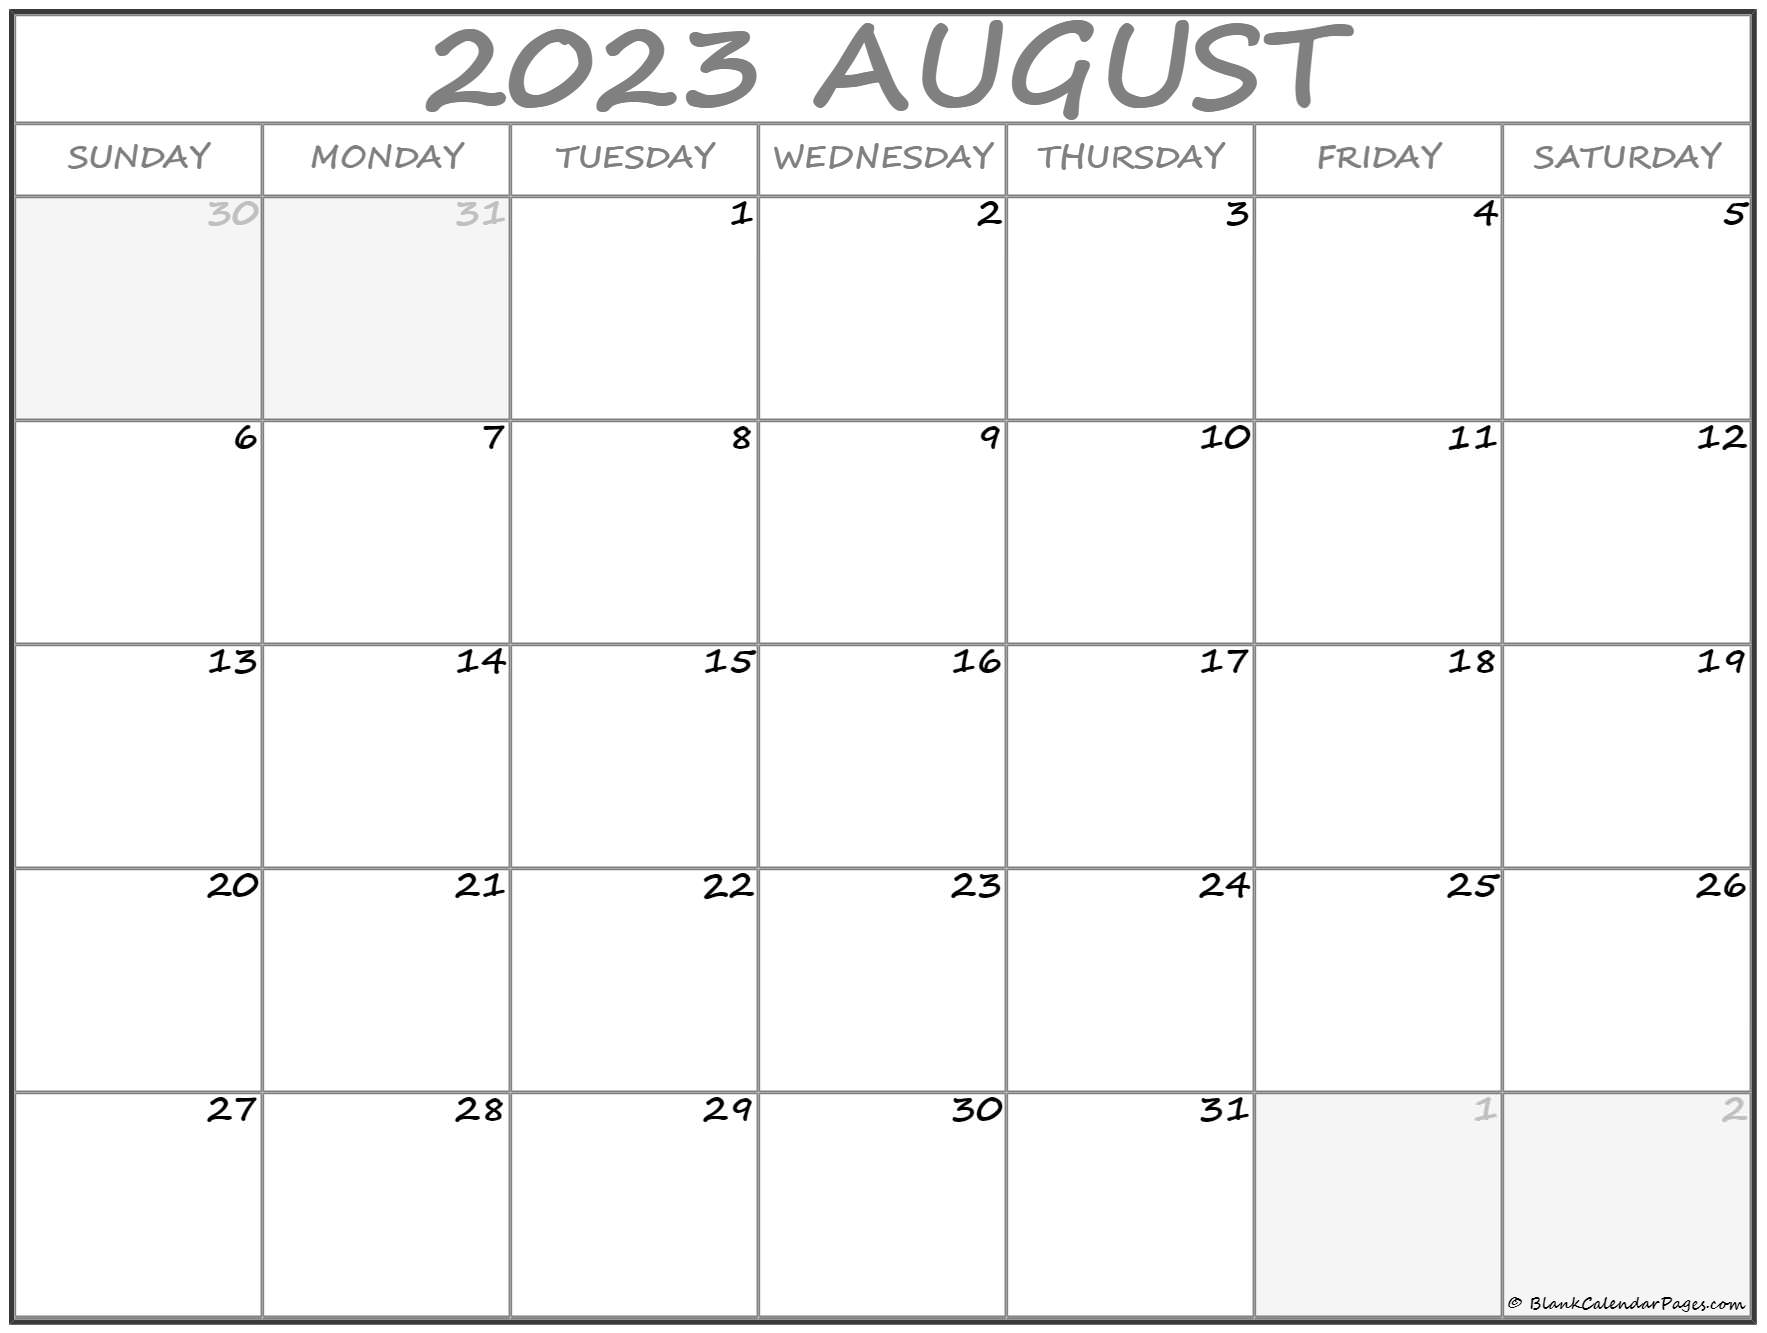 august-2023-calendar-free-printable-calendar